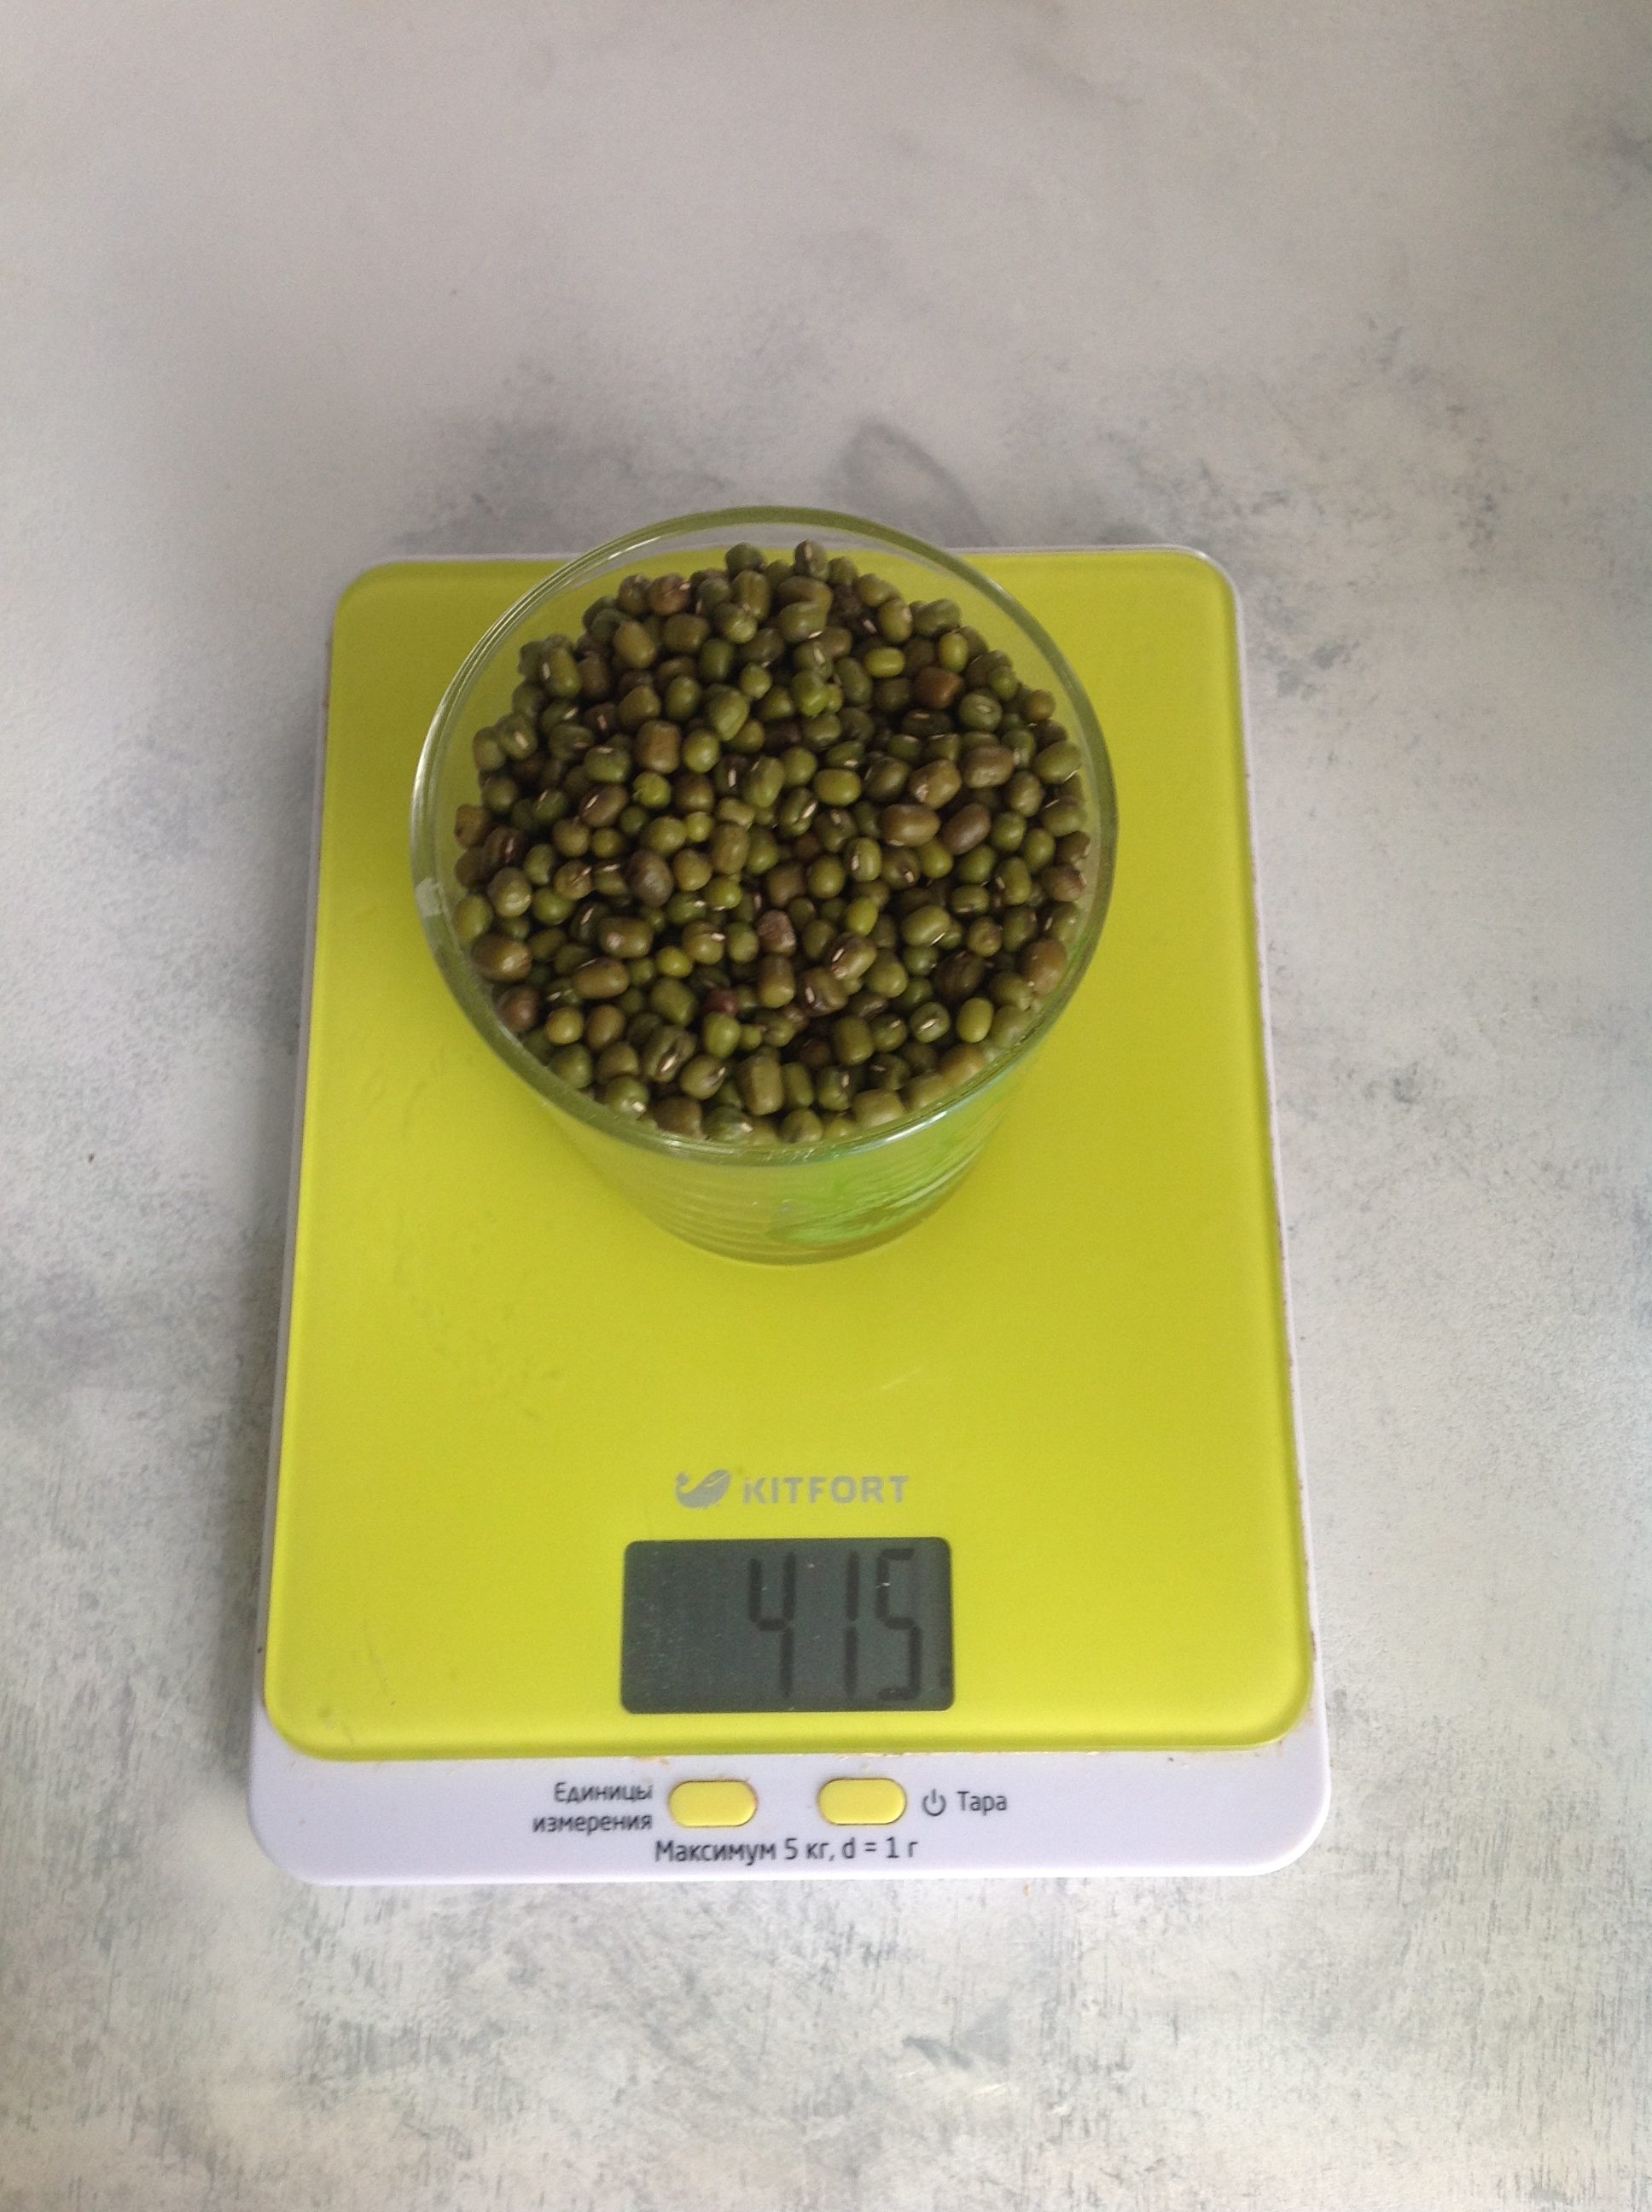 Berapa berat kacang hijau kering dalam gelas 250ml?